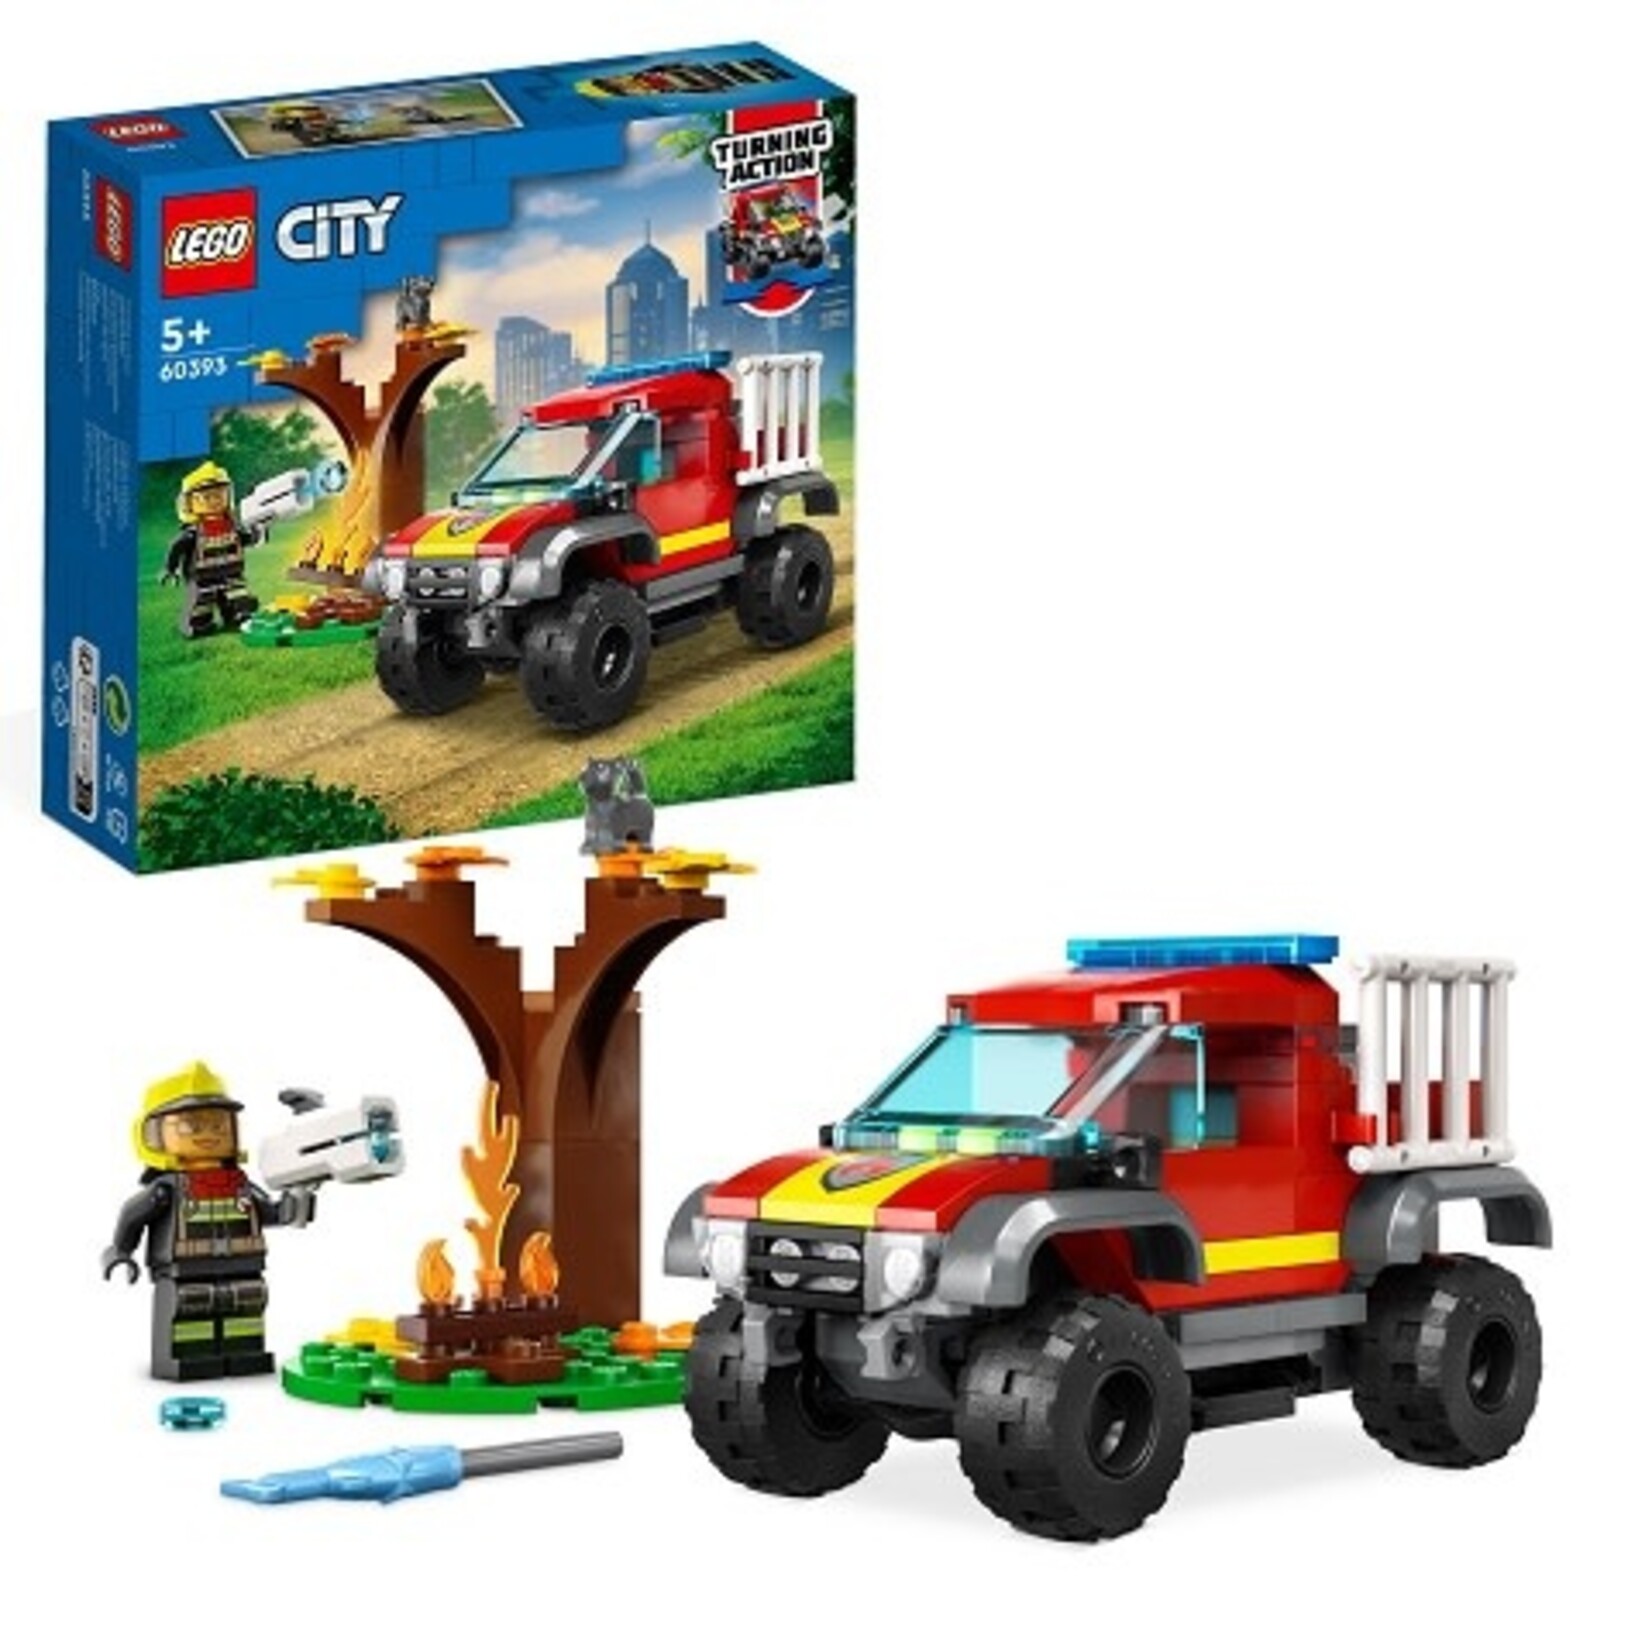 Lego Lego 60393 City Brandweer - Brandweerreddingstruck